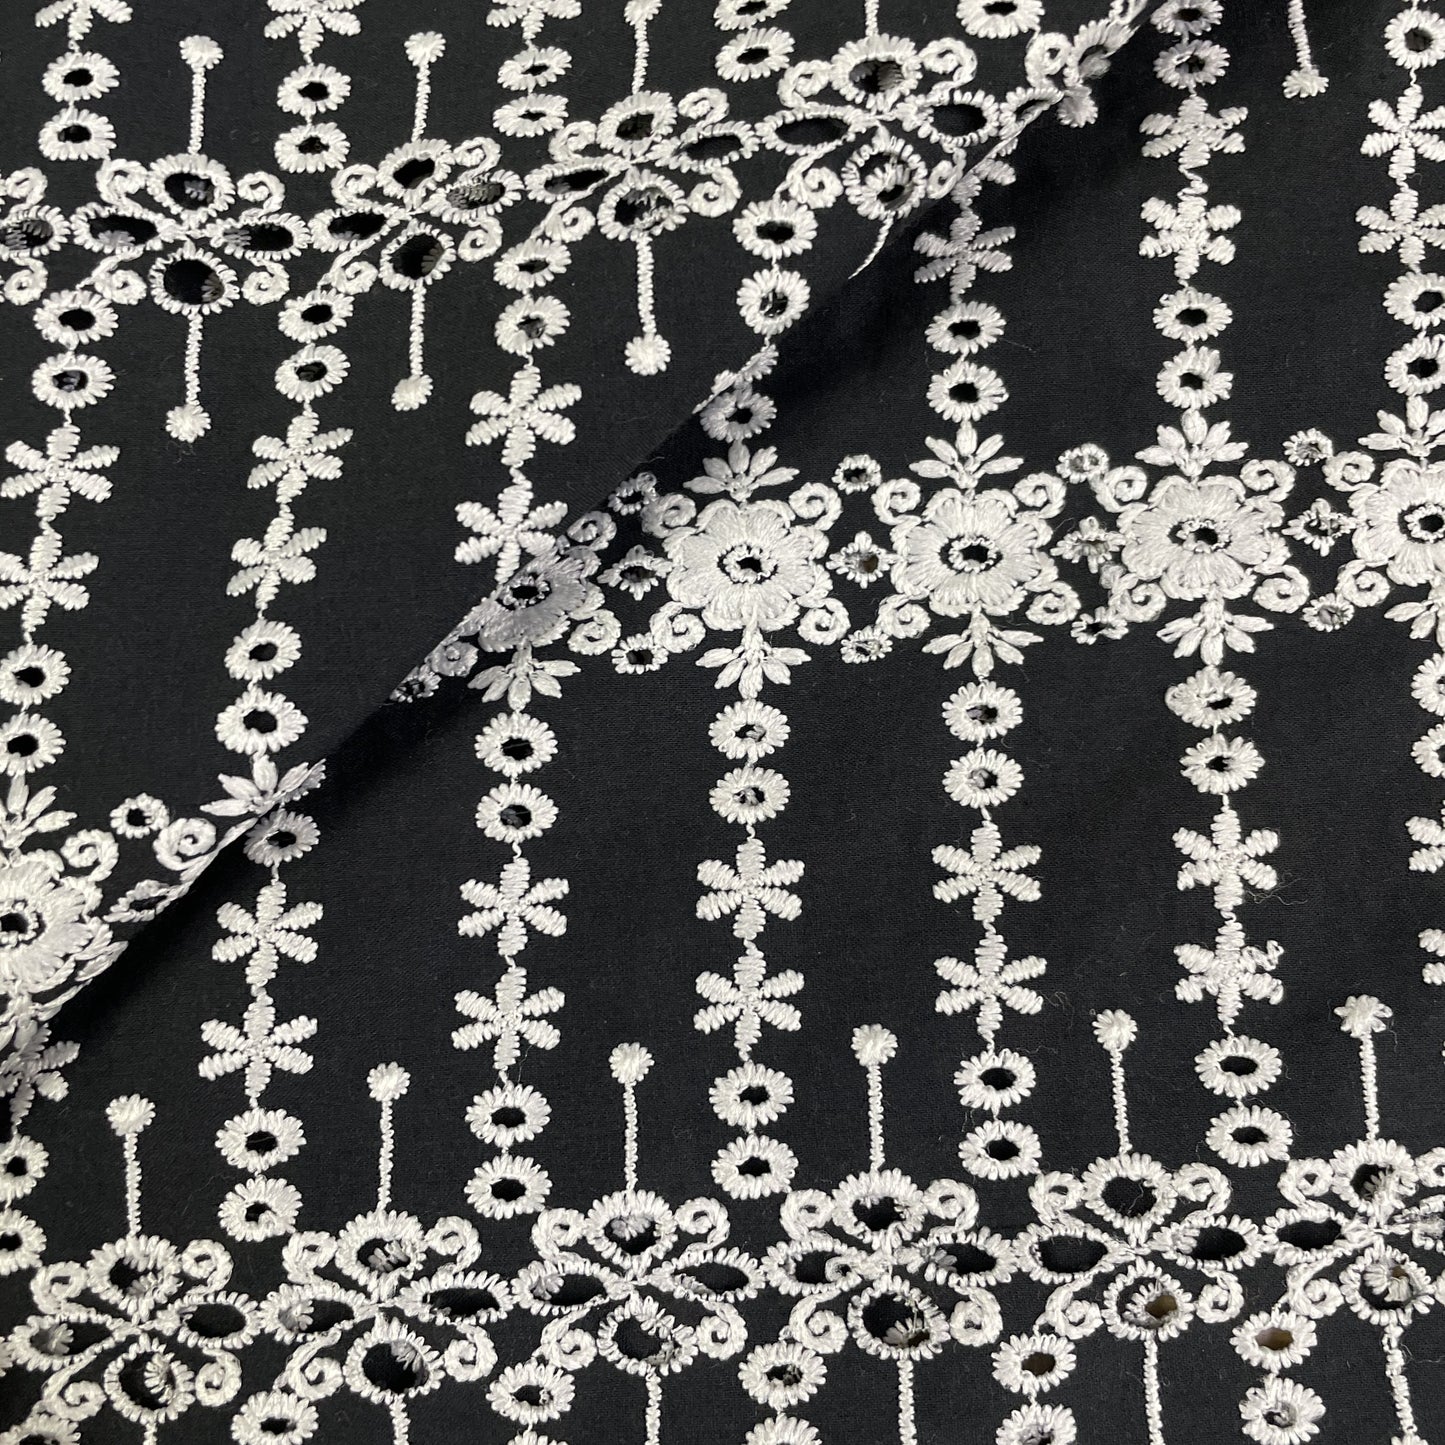 Exclusive Cotton Schiffli Black White Floral Embroidery Fabric